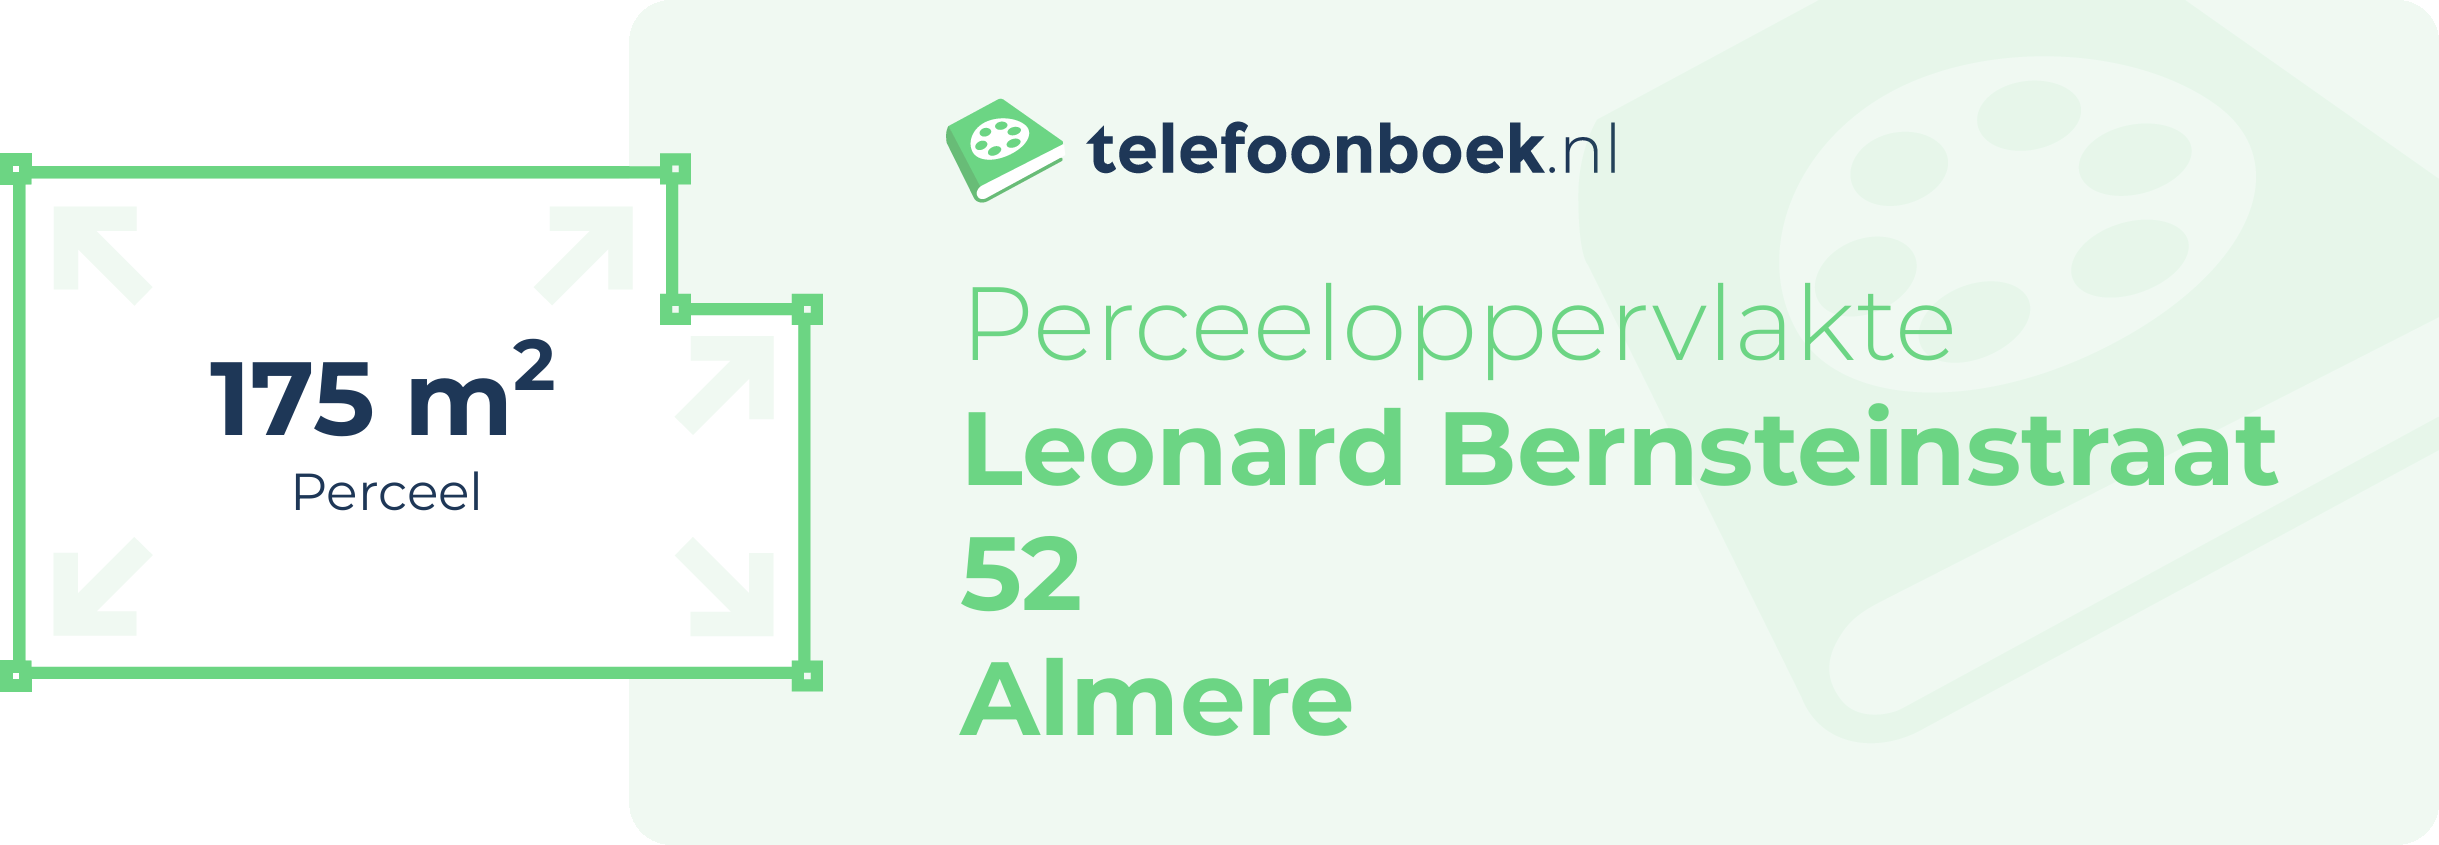 Perceeloppervlakte Leonard Bernsteinstraat 52 Almere